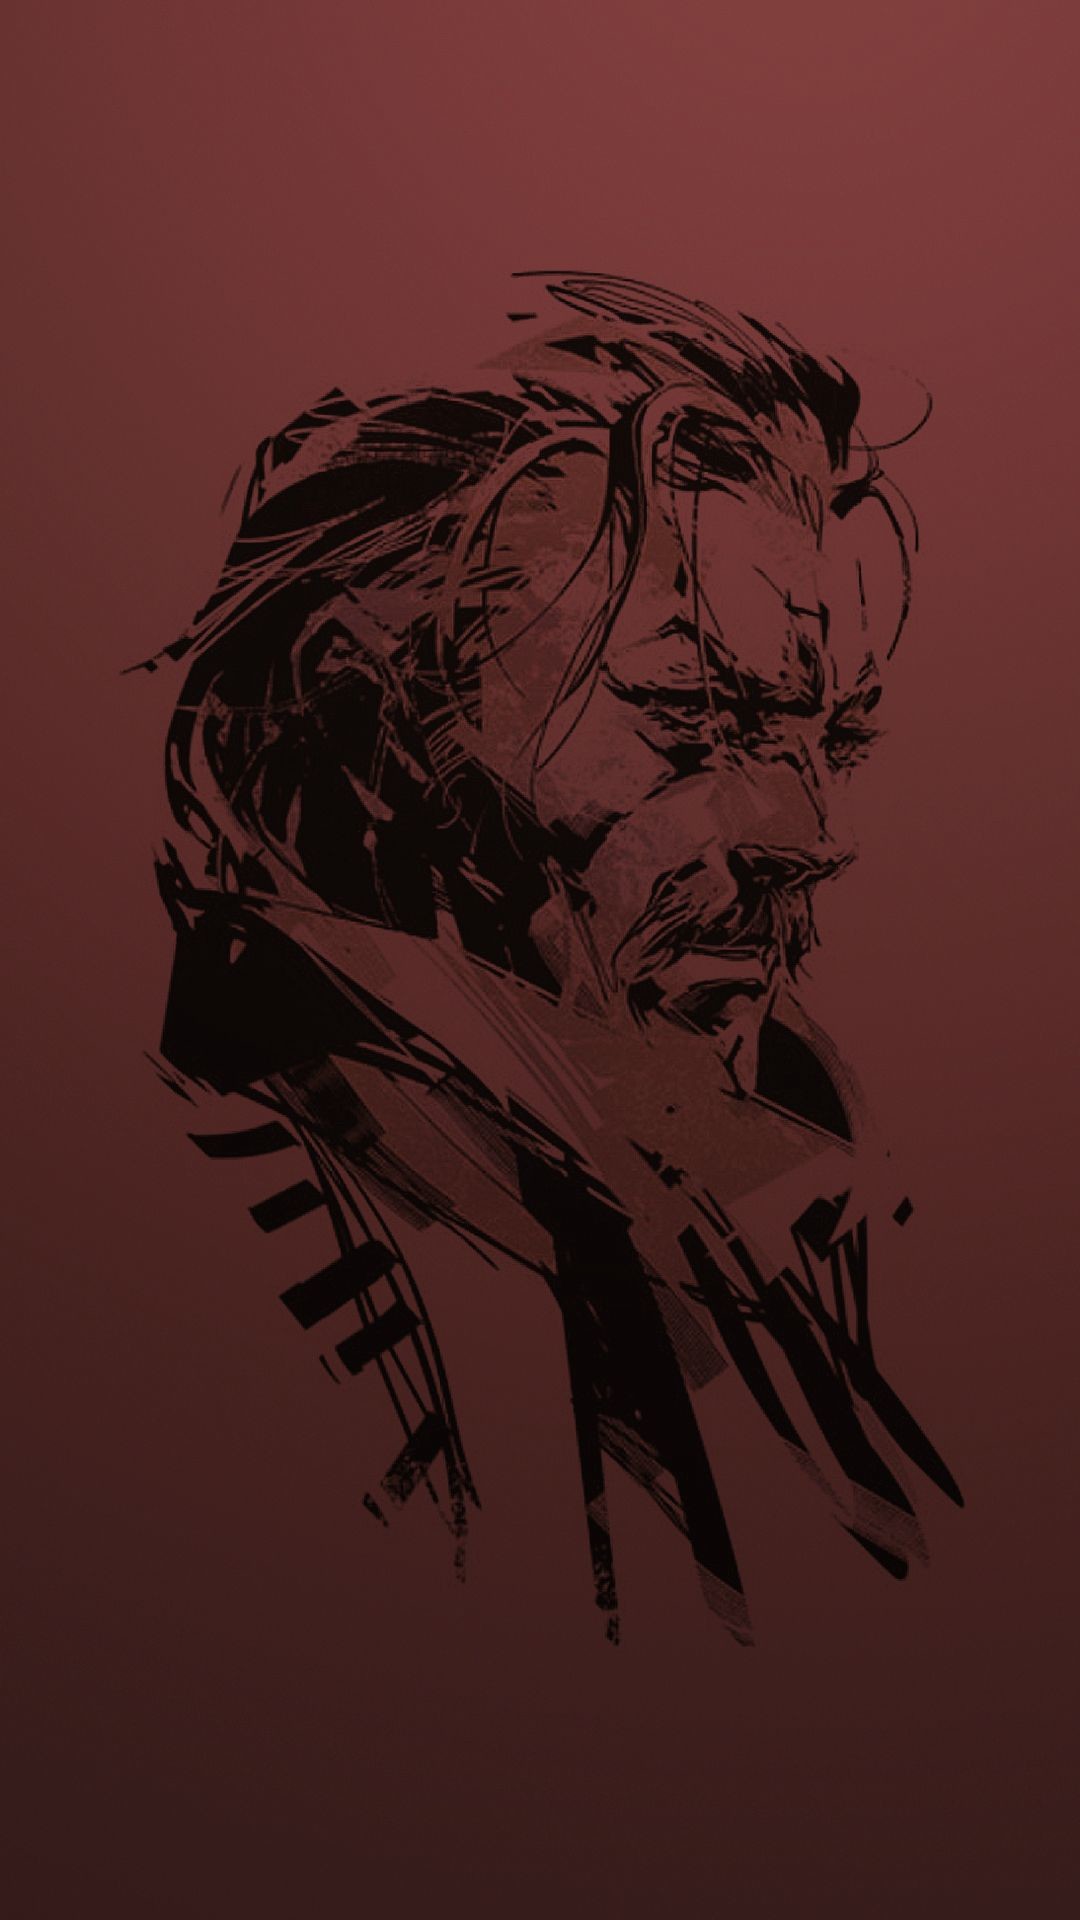 1080x1920 Metal Gear Solid 5 Snake dibujado sobre rojo